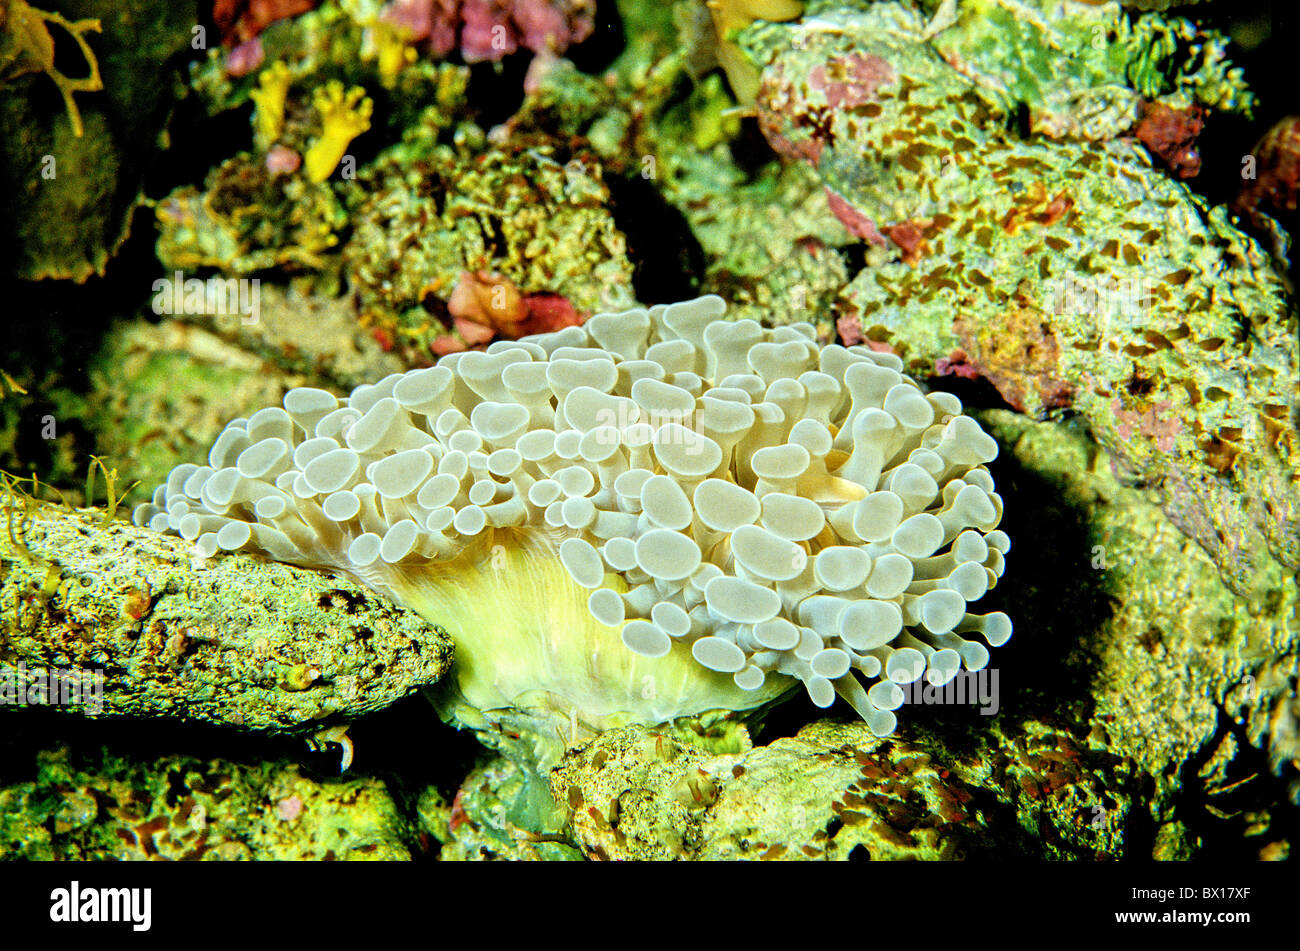 anemone Entacmaea Quadricolor Red Sea Yemen Arabia Orient coral riff riff Stock Photo